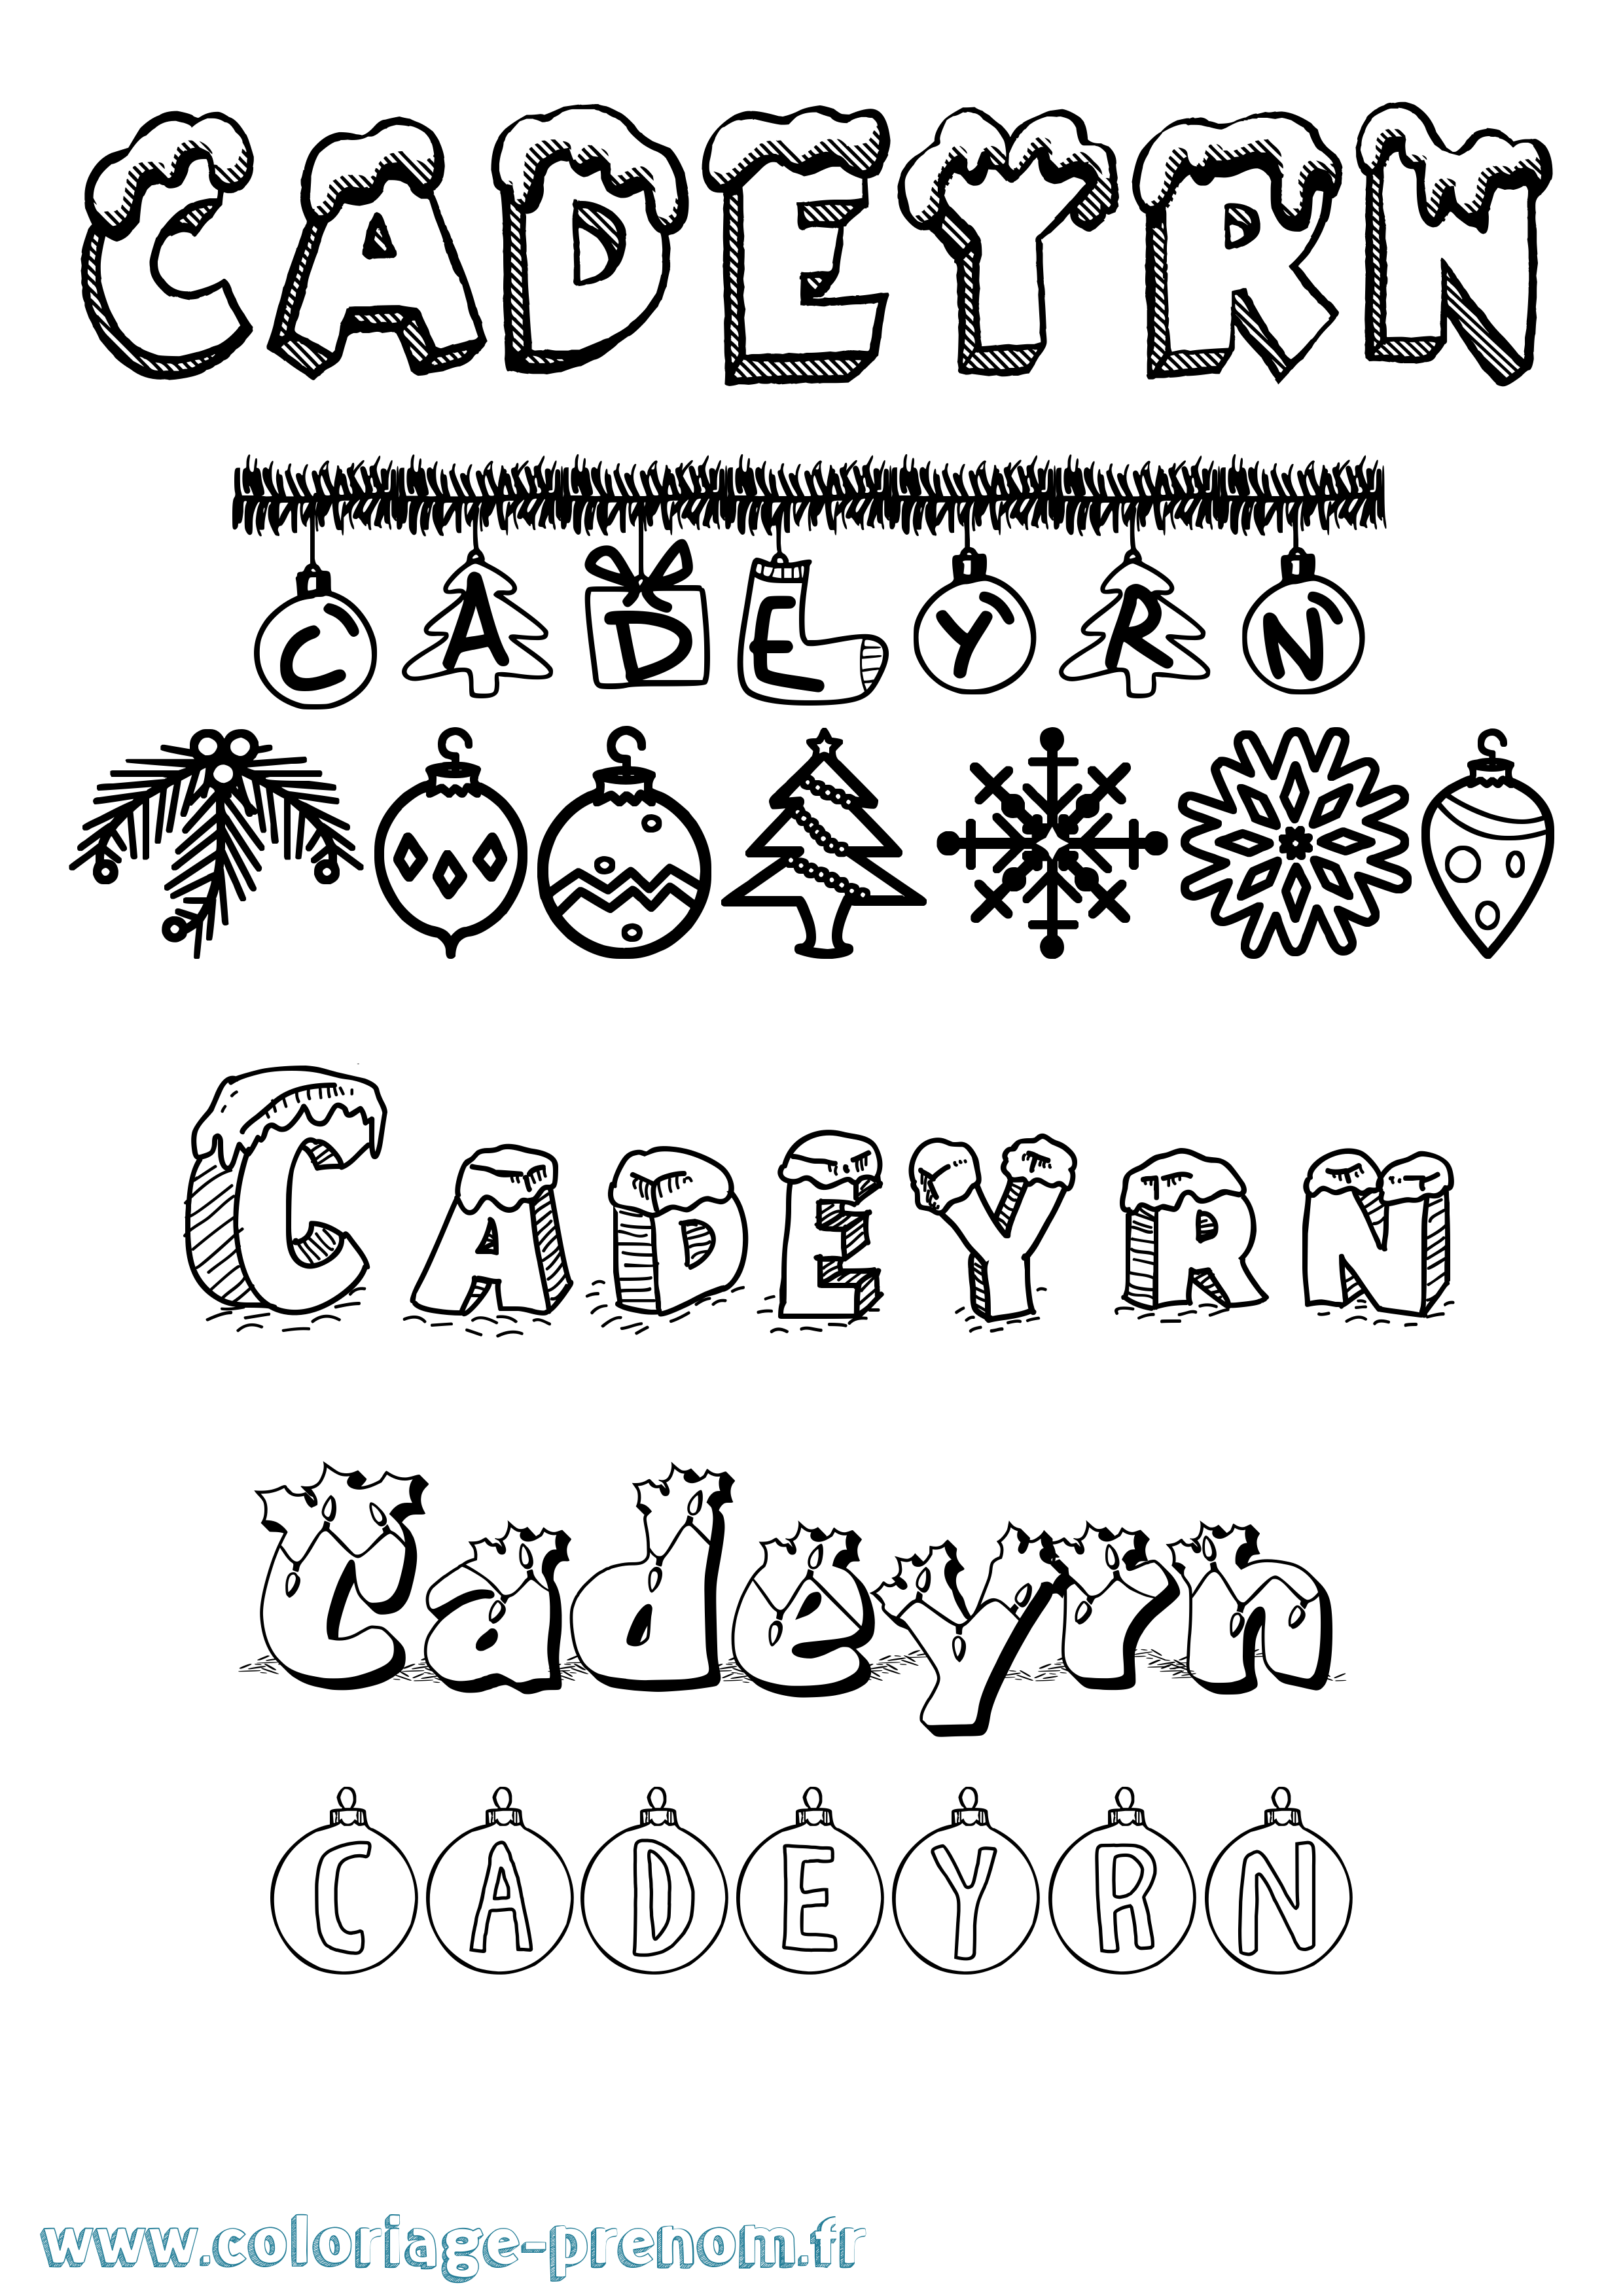 Coloriage prénom Cadeyrn Noël